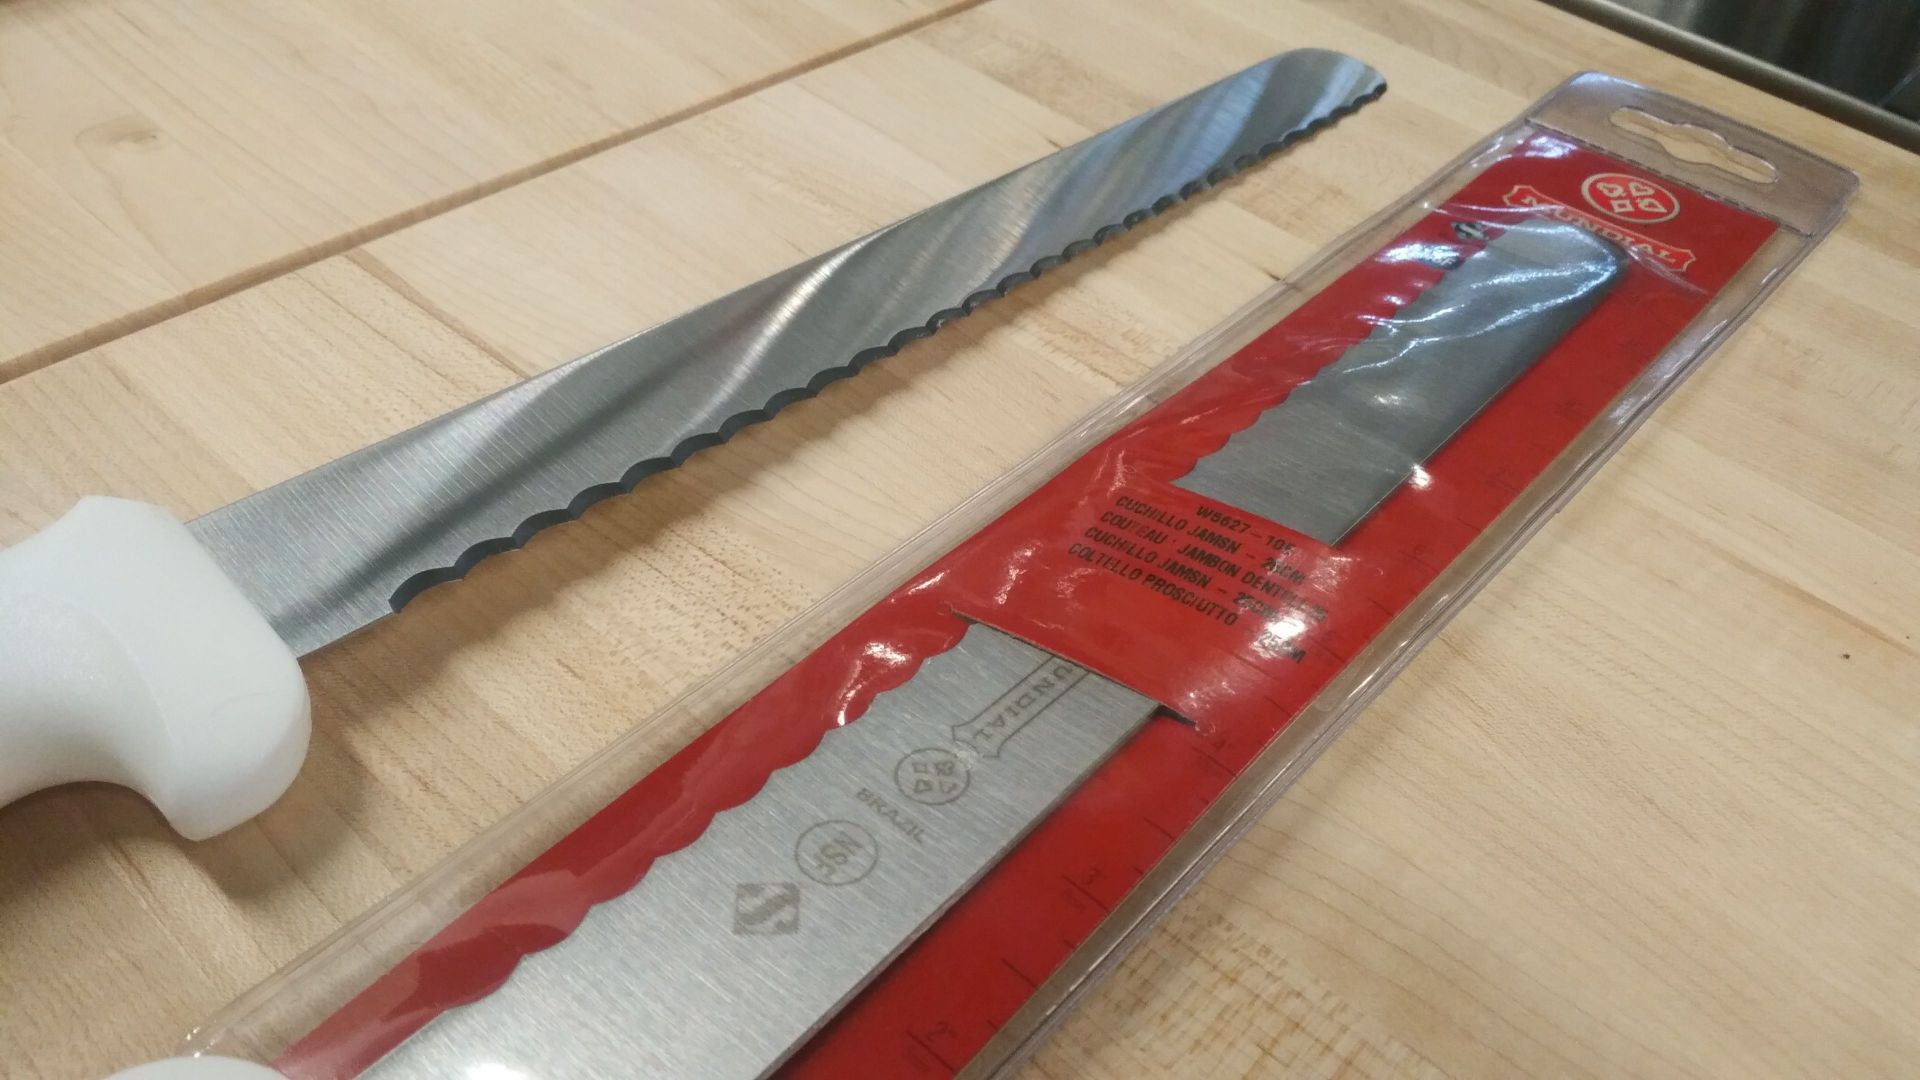 10" Slicing Knives, Mundial W5627-10 - Lot of 2